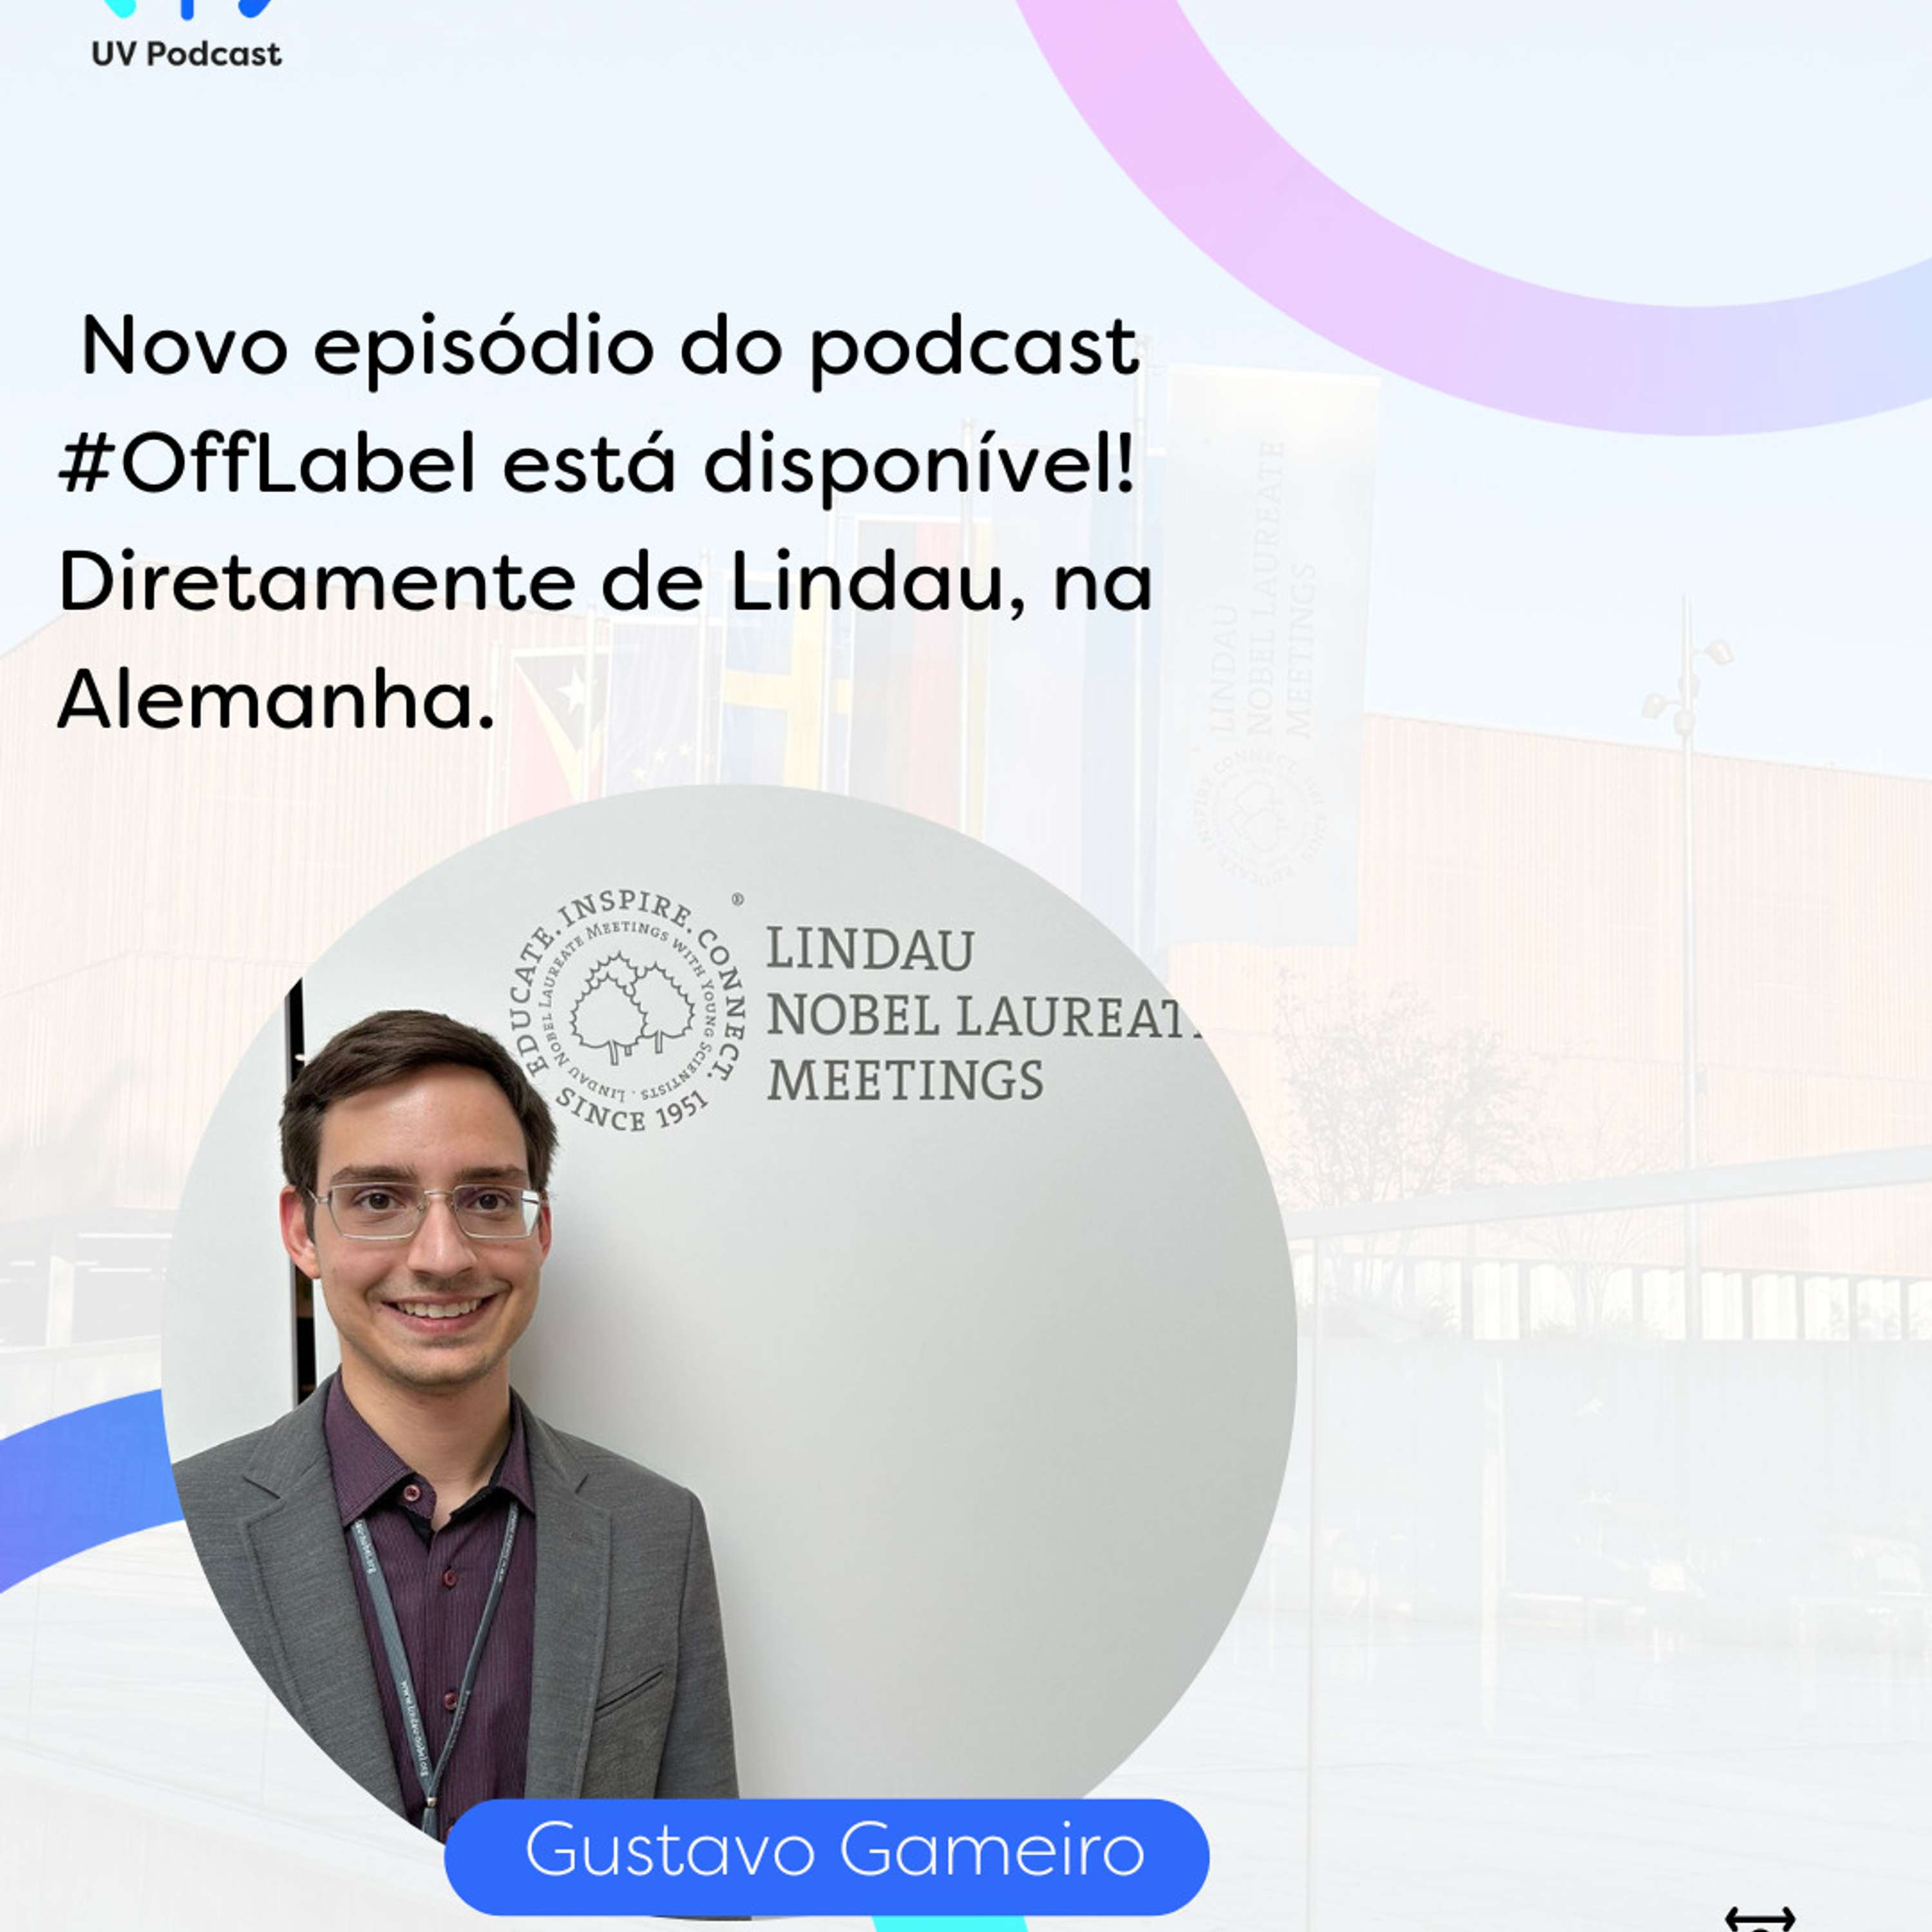 Gustavo Gameiro | Off Label |Episódio 03 - Espírito de Lindau